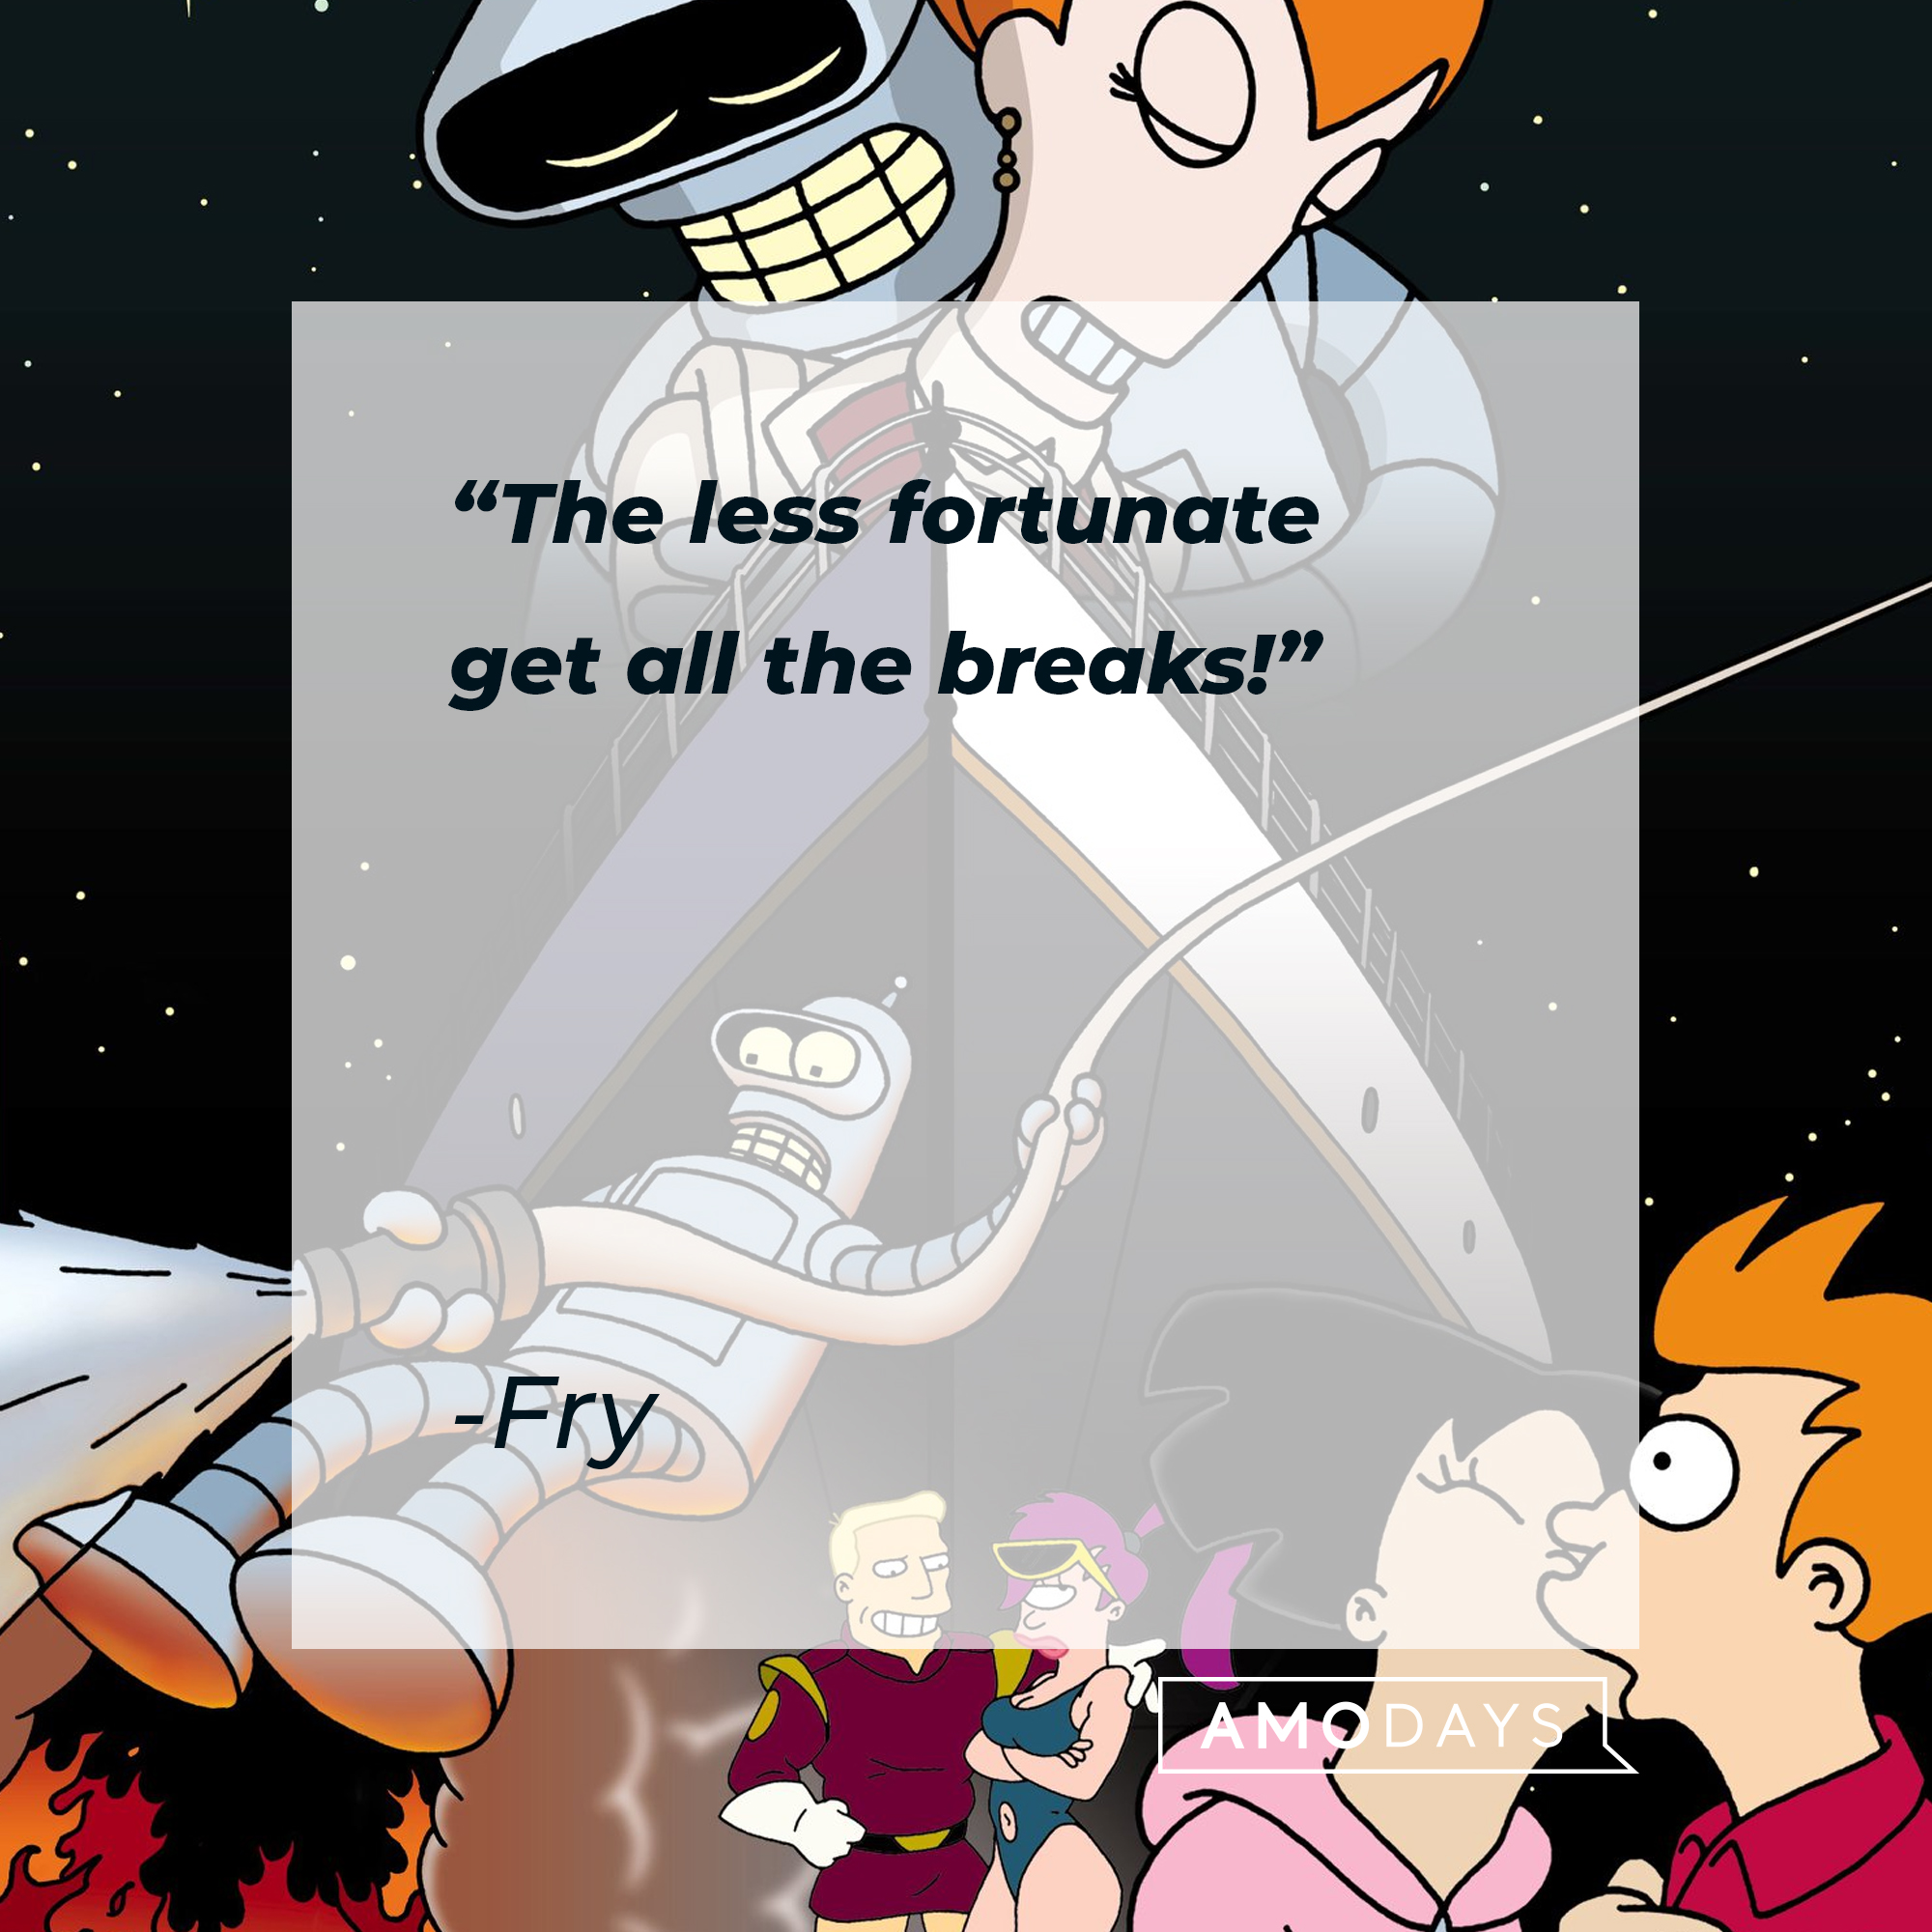 Fry Futurama's quote: "The less unfortunate get all the breaks!" | Source: Facebook.com/Futurama